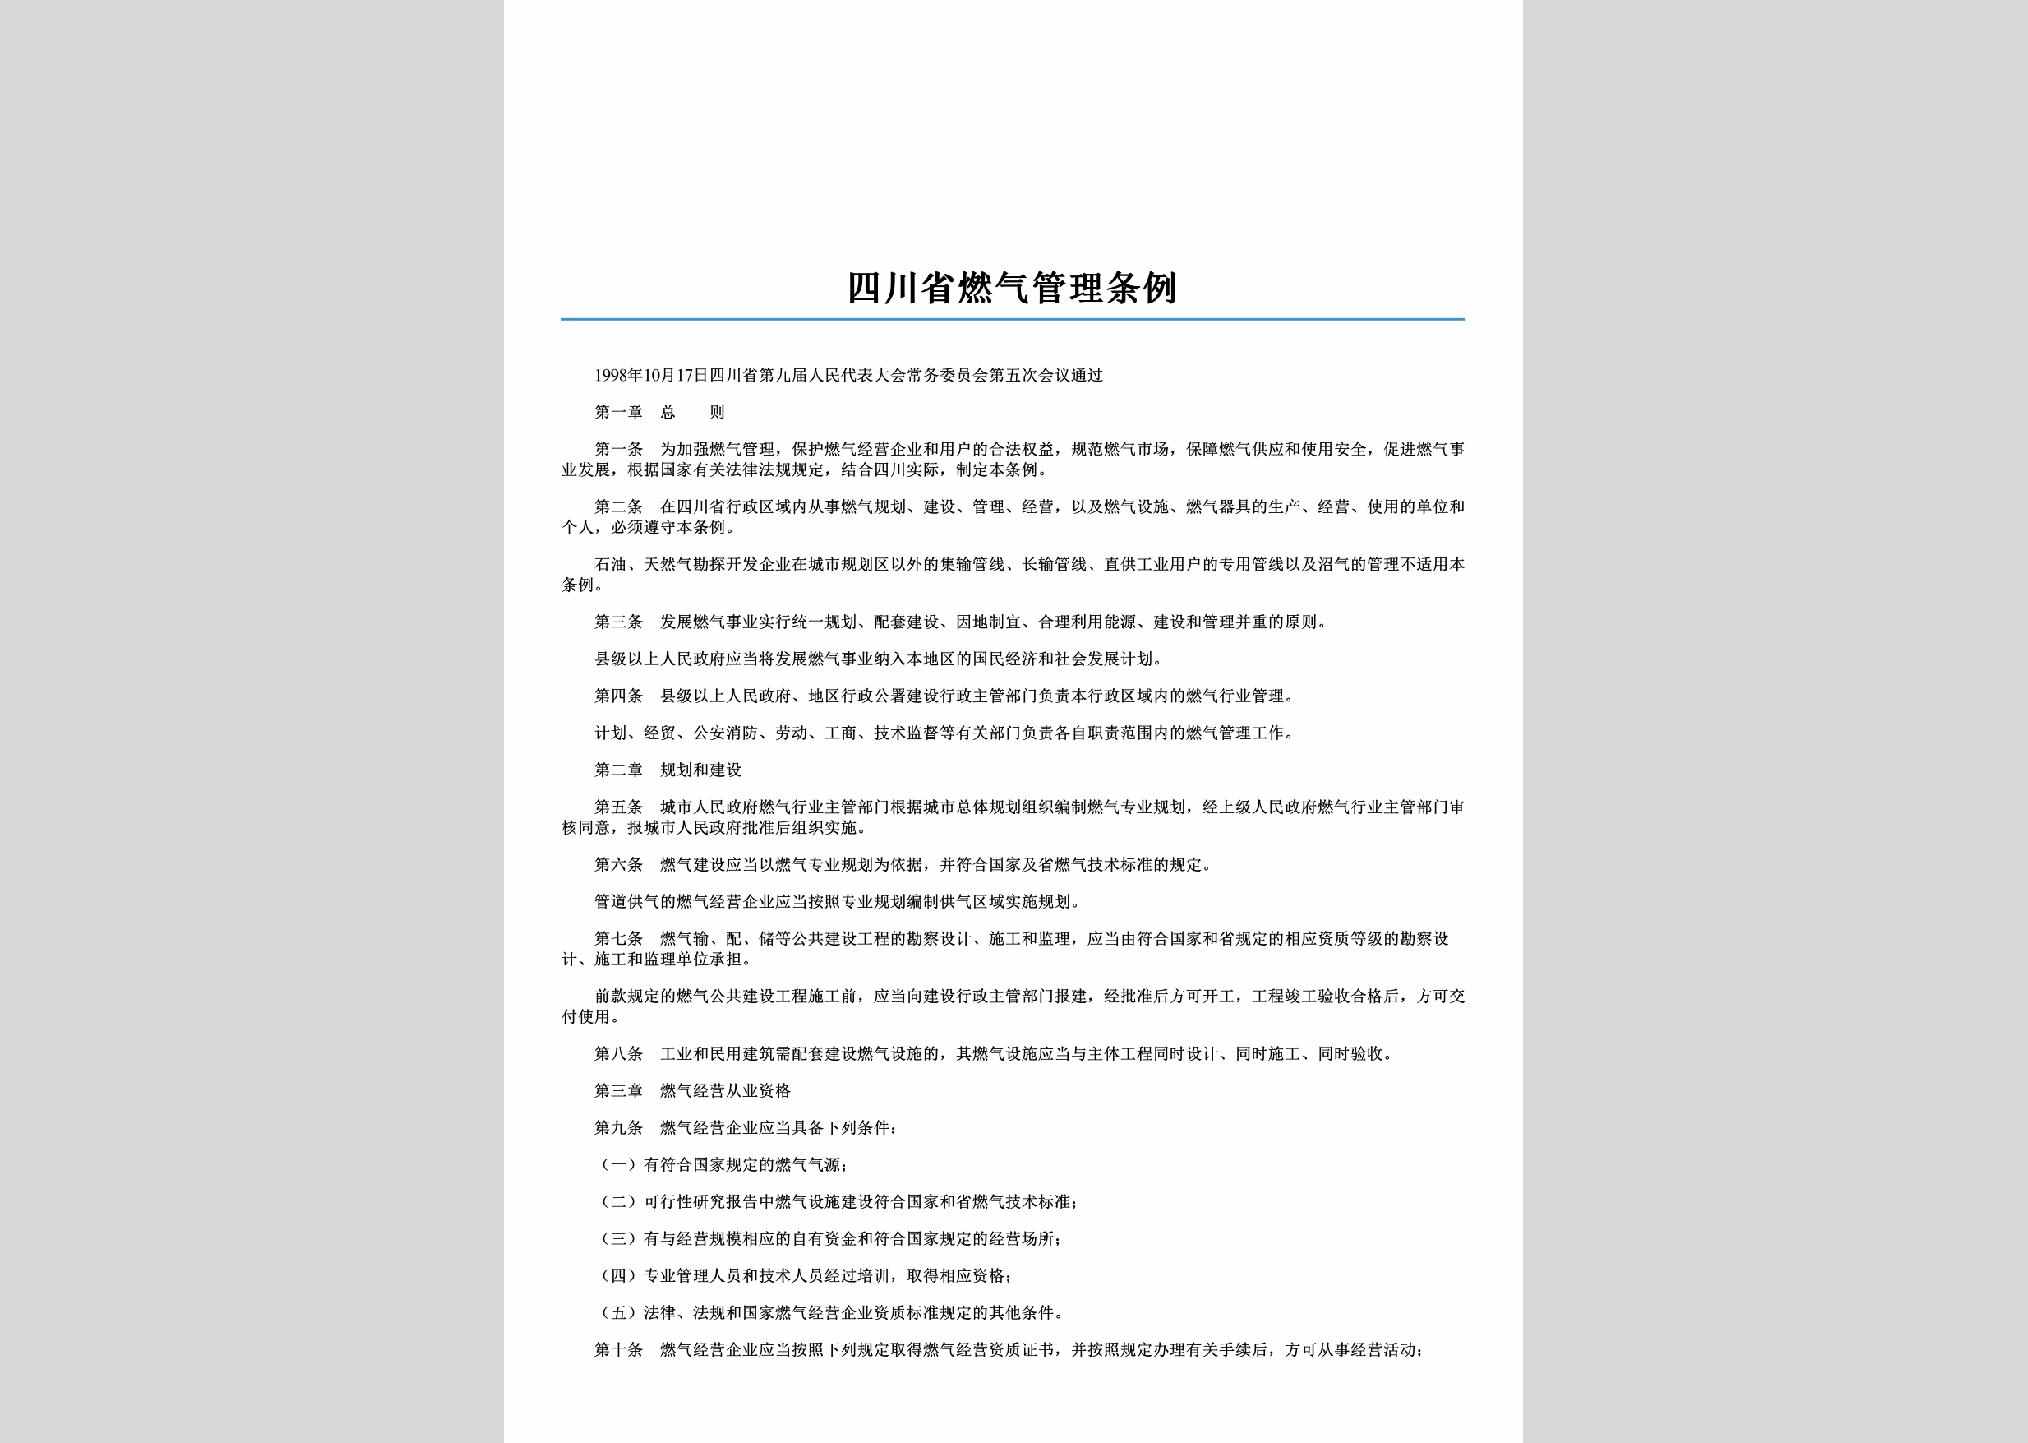 SC-RQGLTL-1999：四川省燃气管理条例